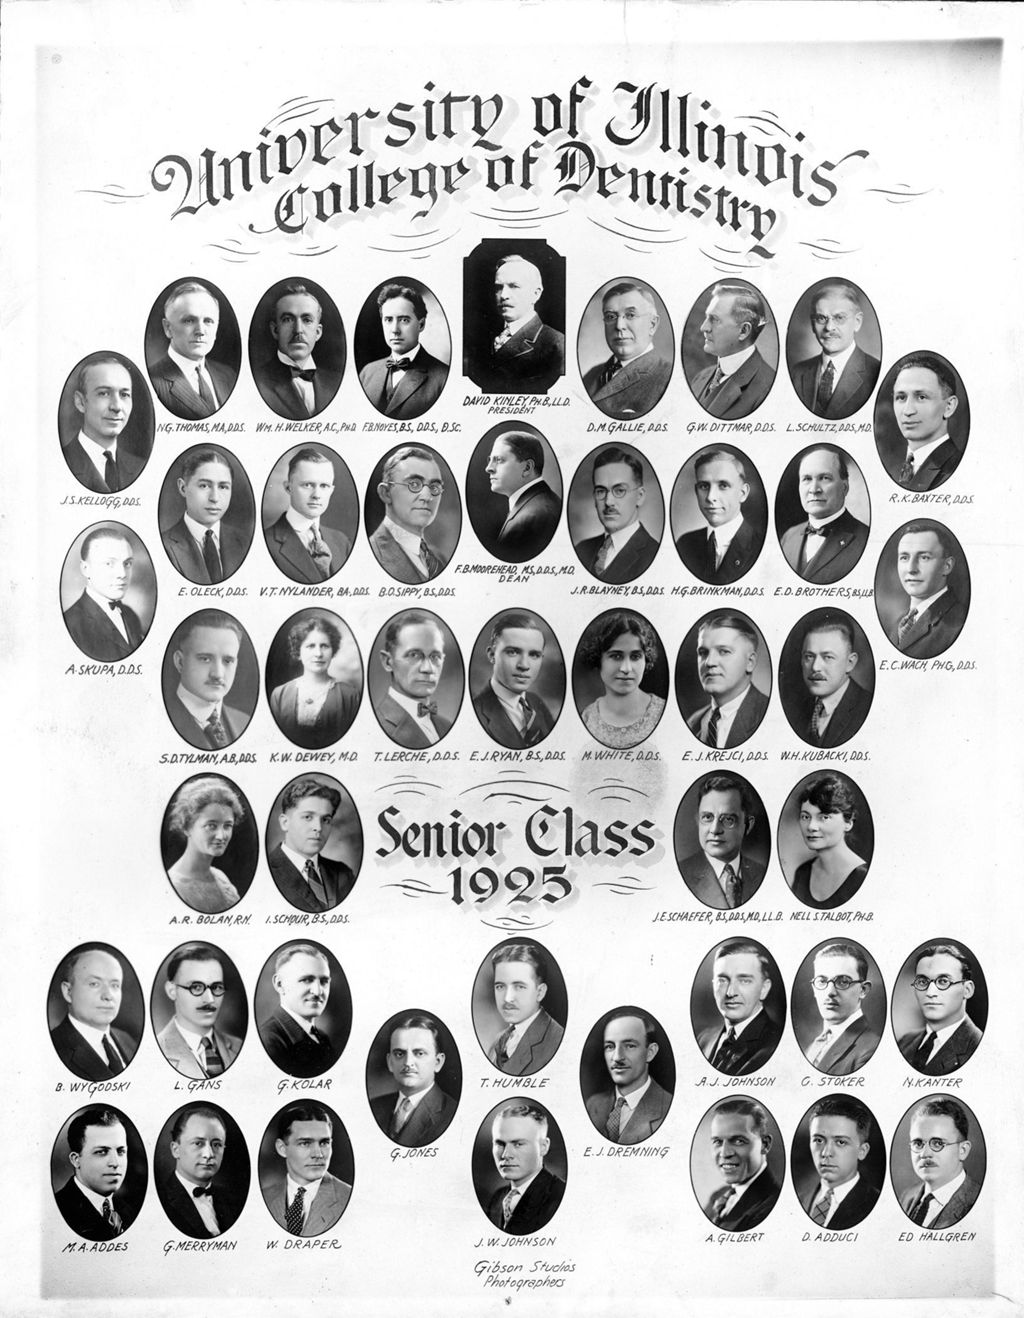 Miniature of 1925 graduating class, University of Illinois College of Dentistry